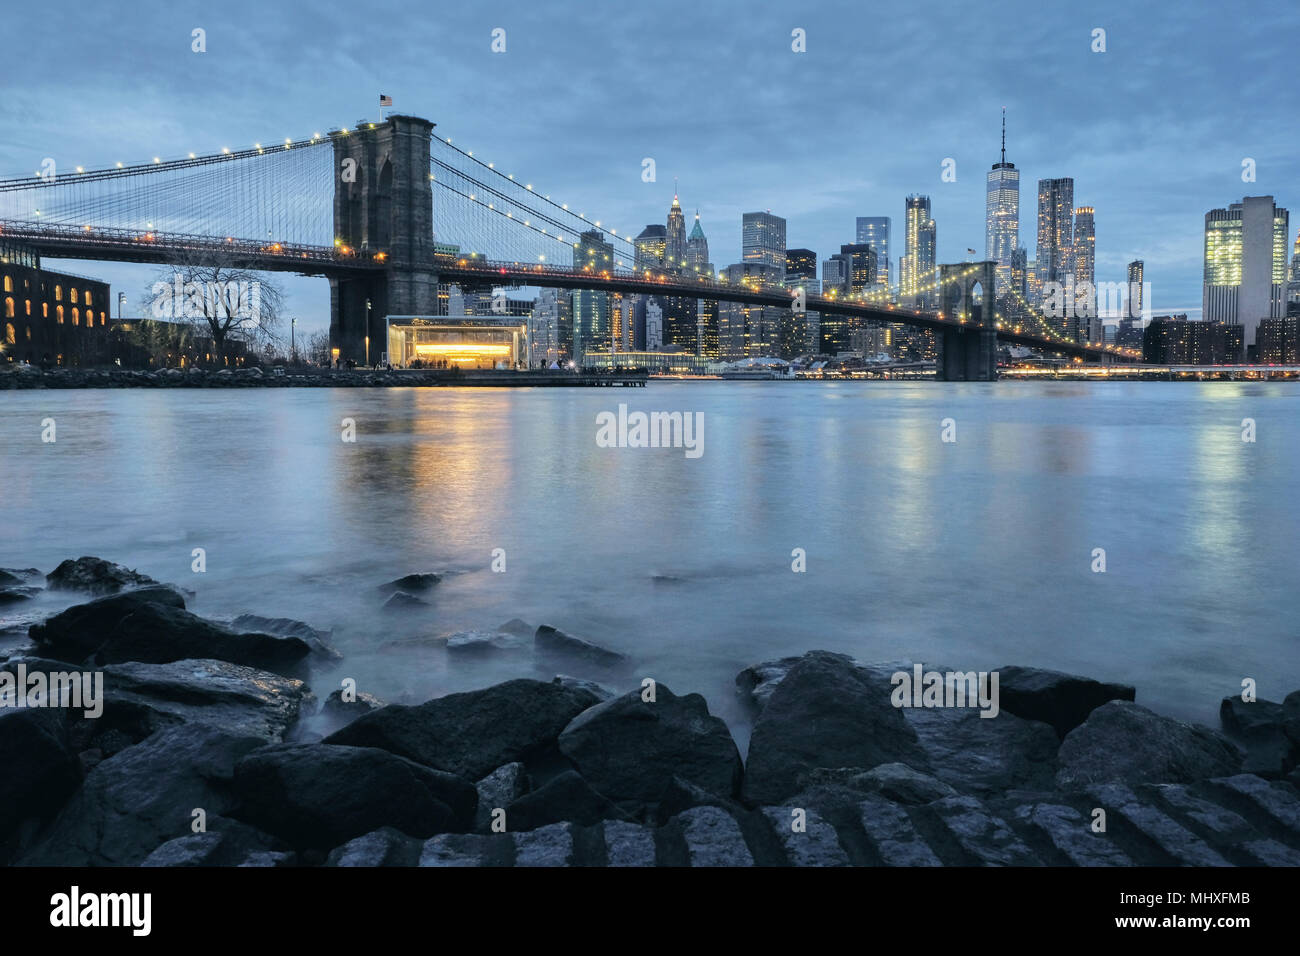 Cityscape with Brooklyn Bridge and Lower Manhattan skyline at dusk, New York, USA Stock Photo